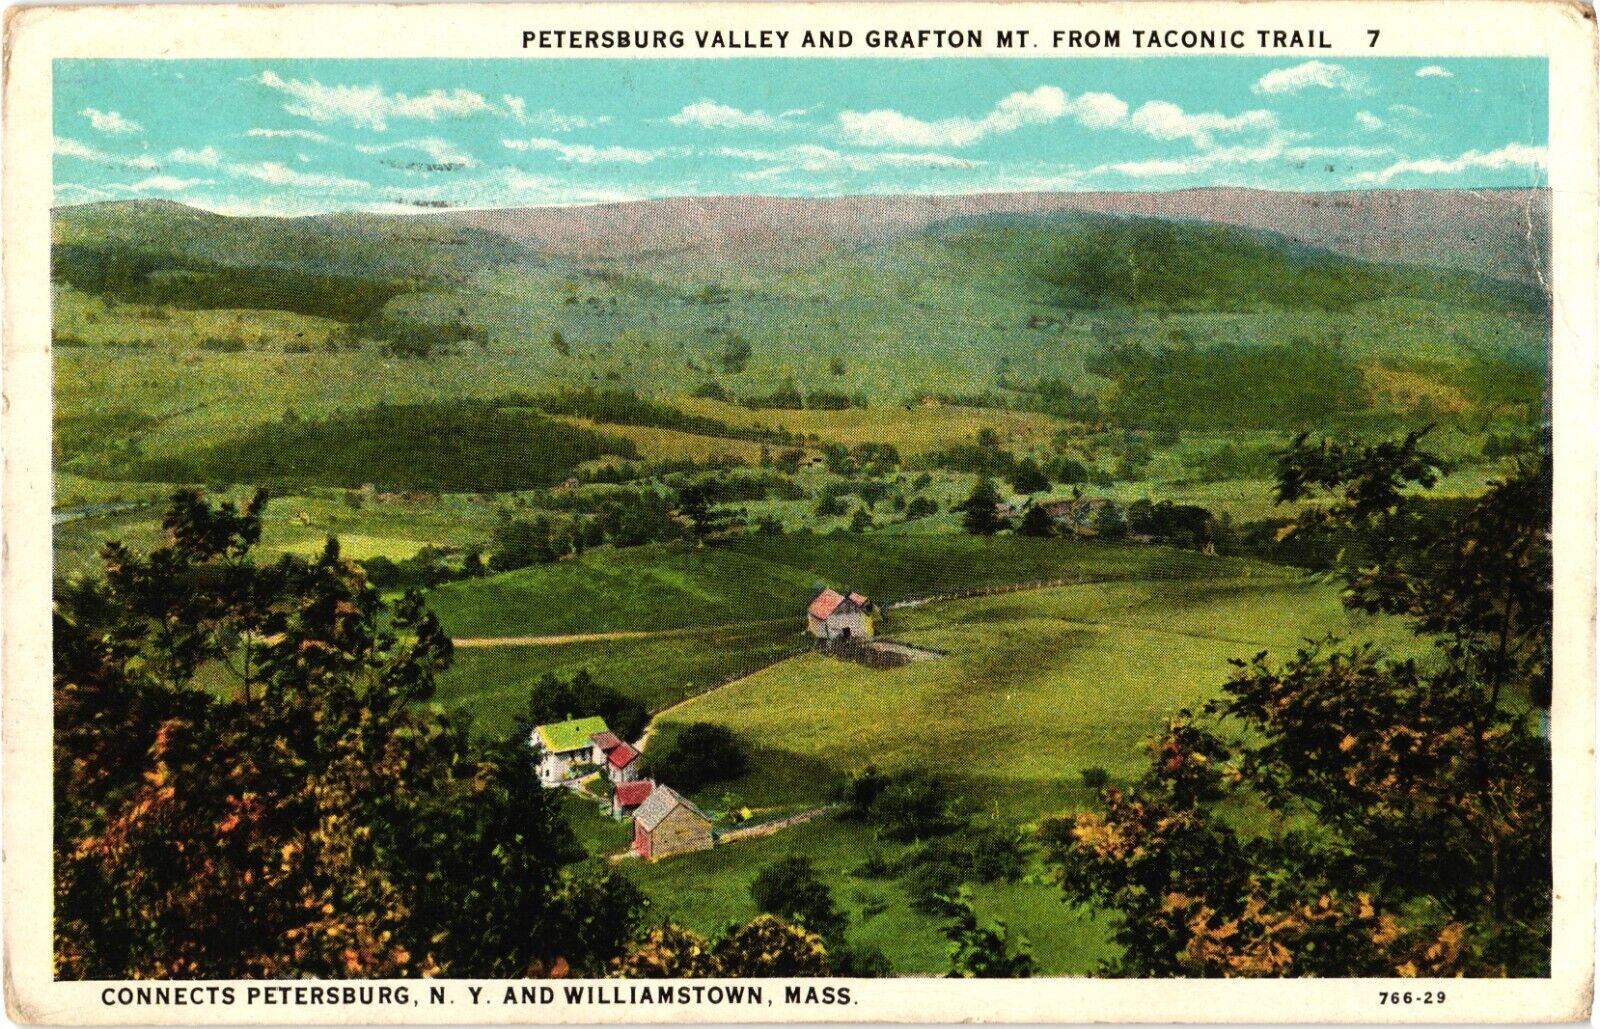 Grafton Mountain Taconic Trail Petersburg NY & Williamsburg MA Postcard 1930s